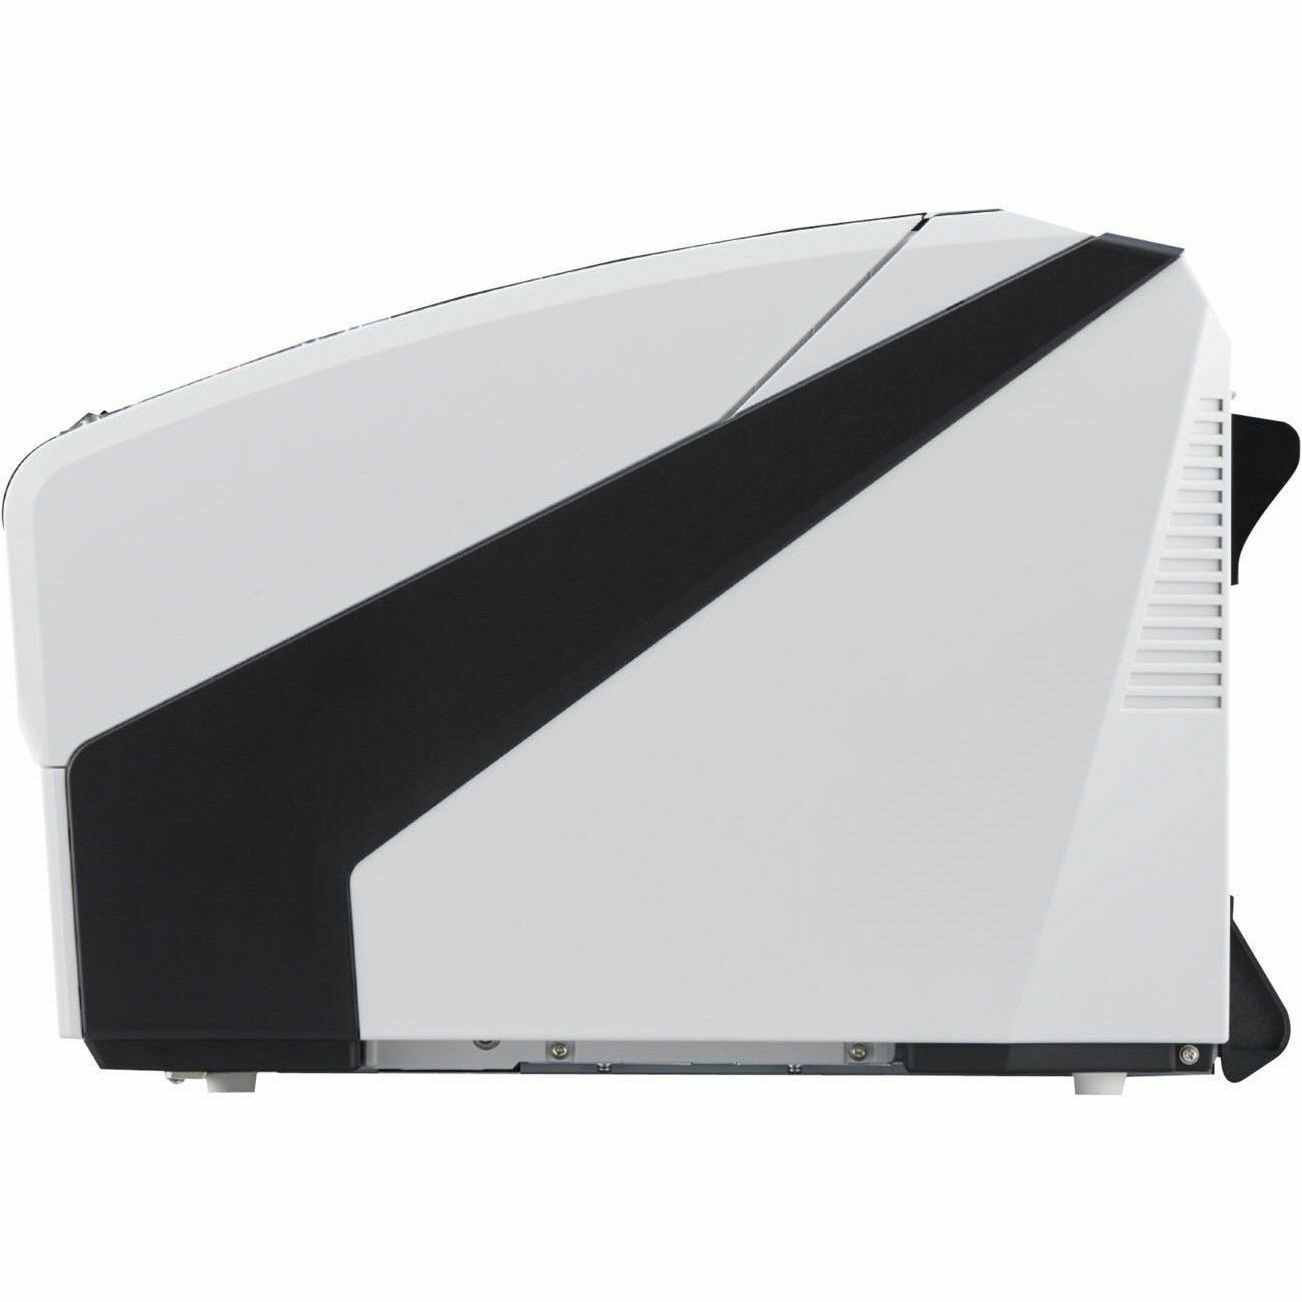 Fujitsu ImageScanner 7800 ADF/Manual Feed Scanner - 600 dpi Optical